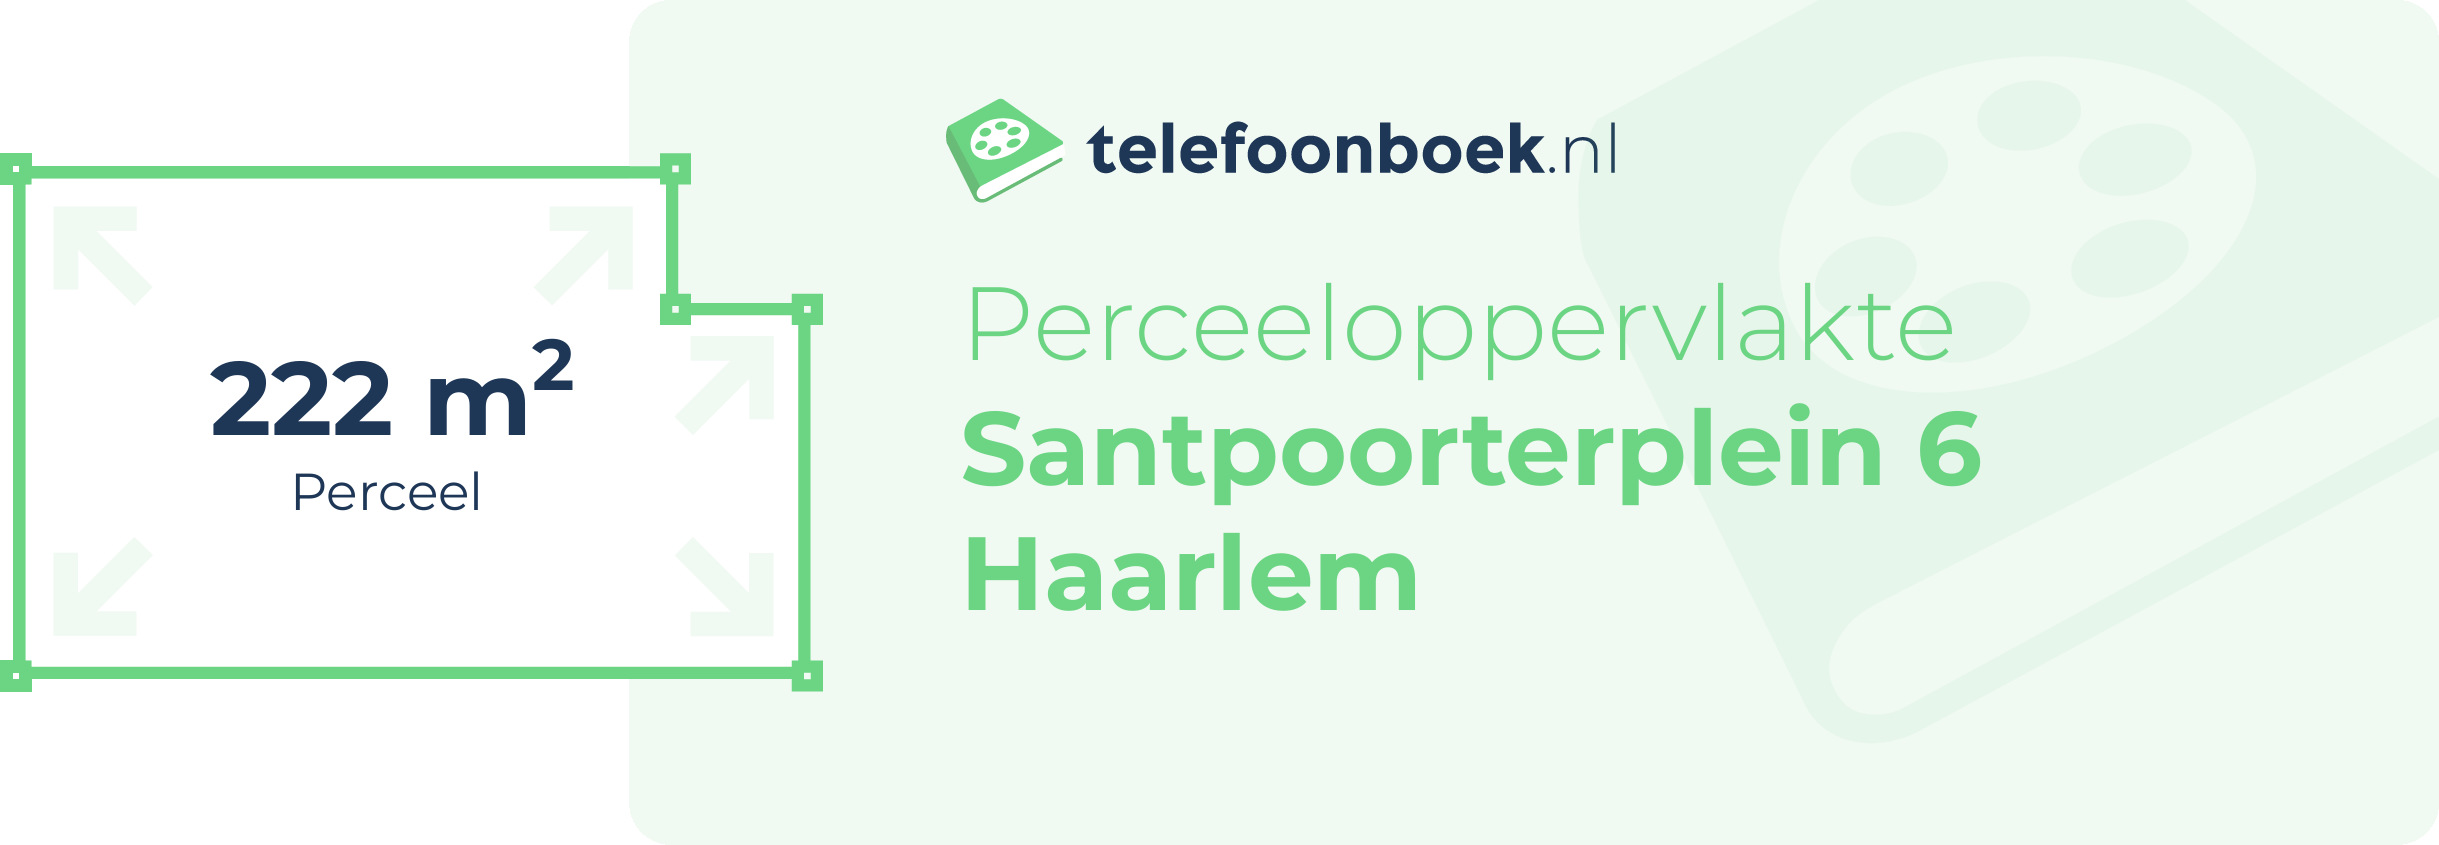 Perceeloppervlakte Santpoorterplein 6 Haarlem